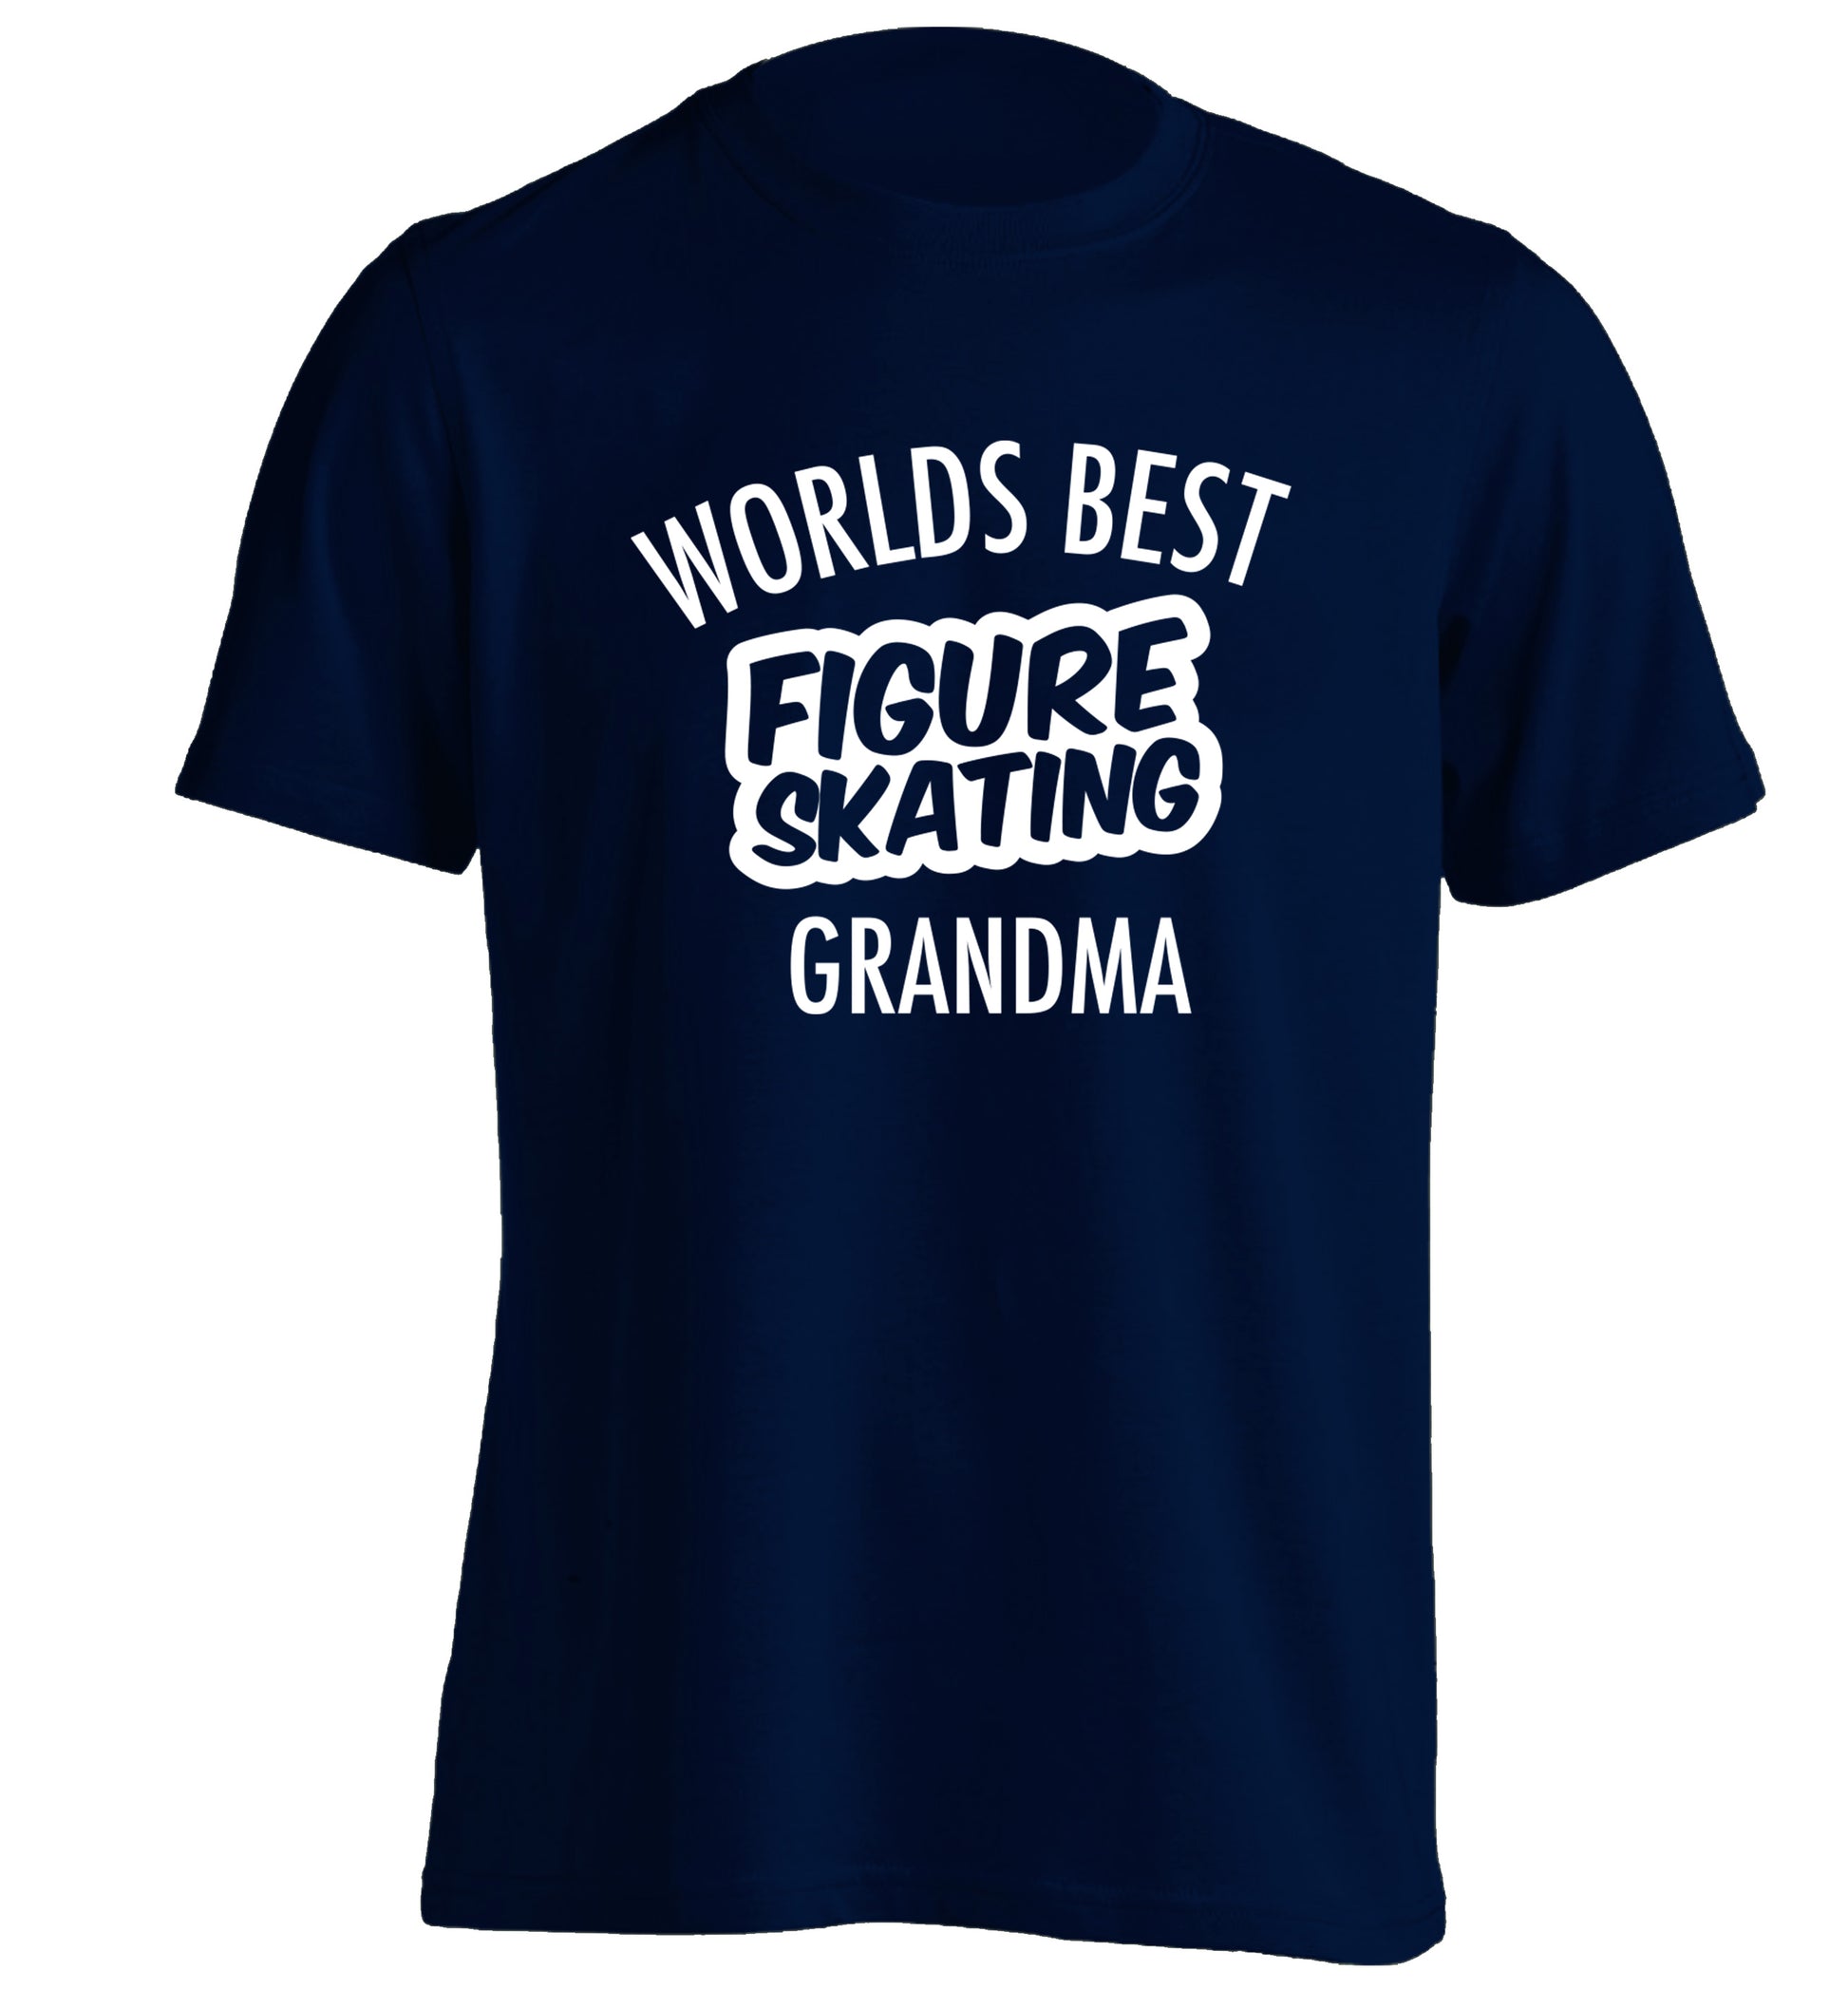 Worlds best figure skating grandma adults unisexnavy Tshirt 2XL